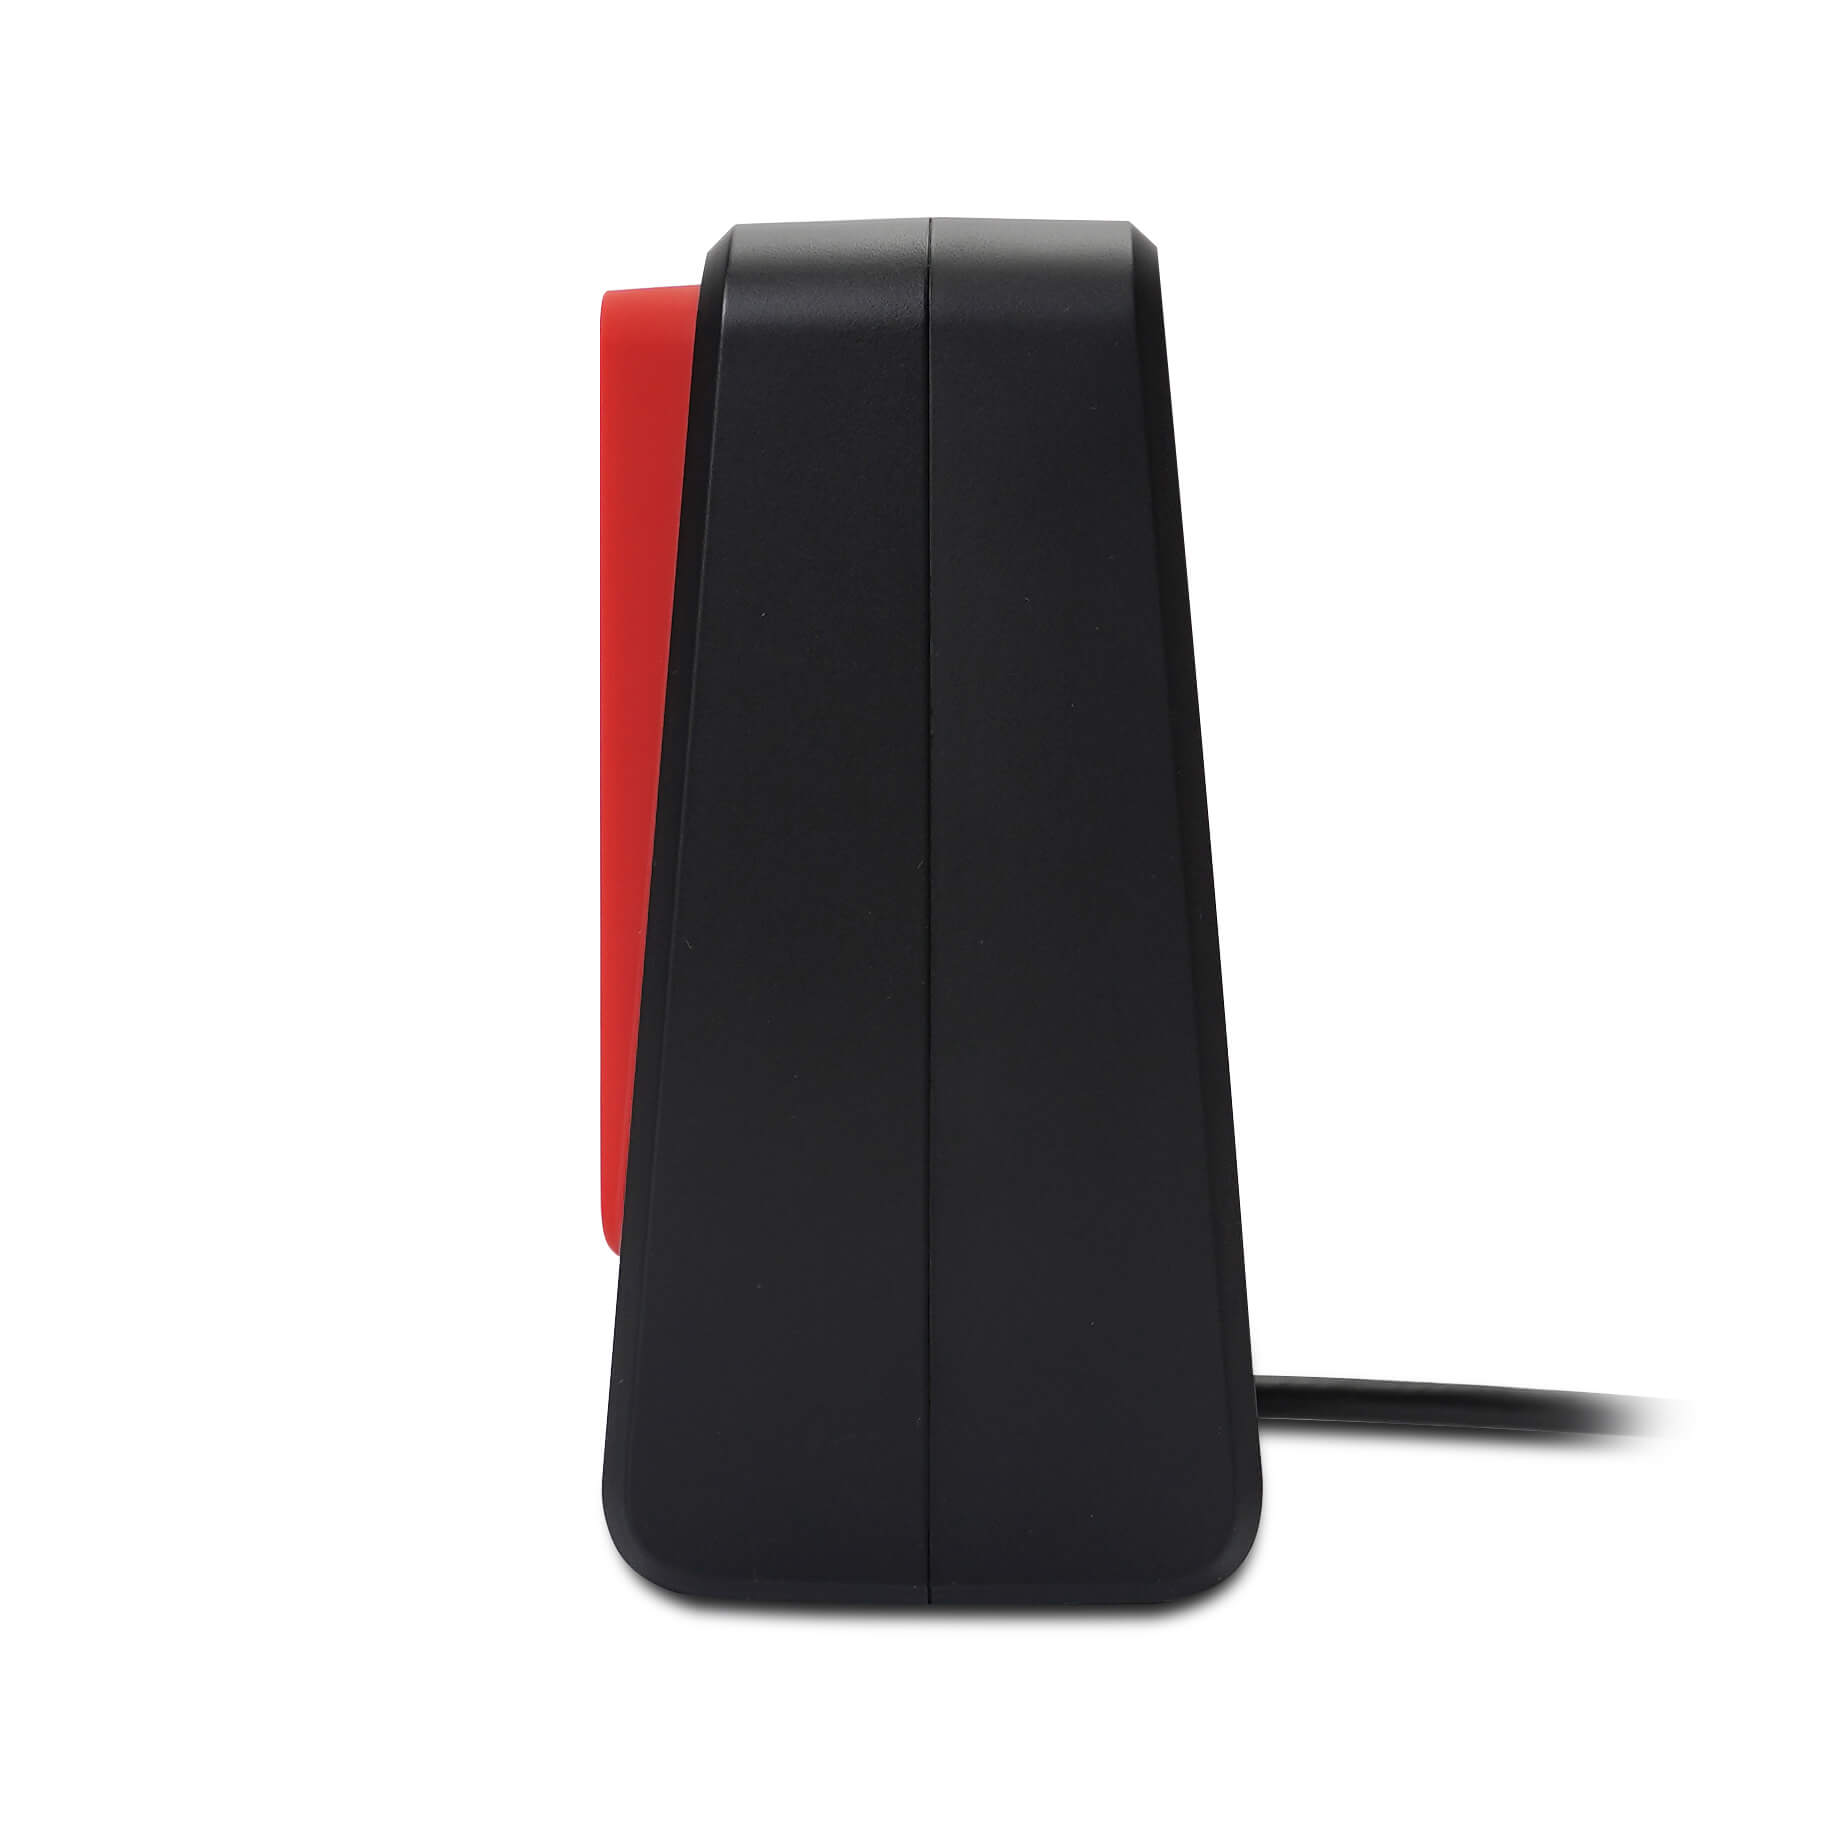 Стационарный сканер штрих-кода MERTECH 8400 P2D Superlead USB Red